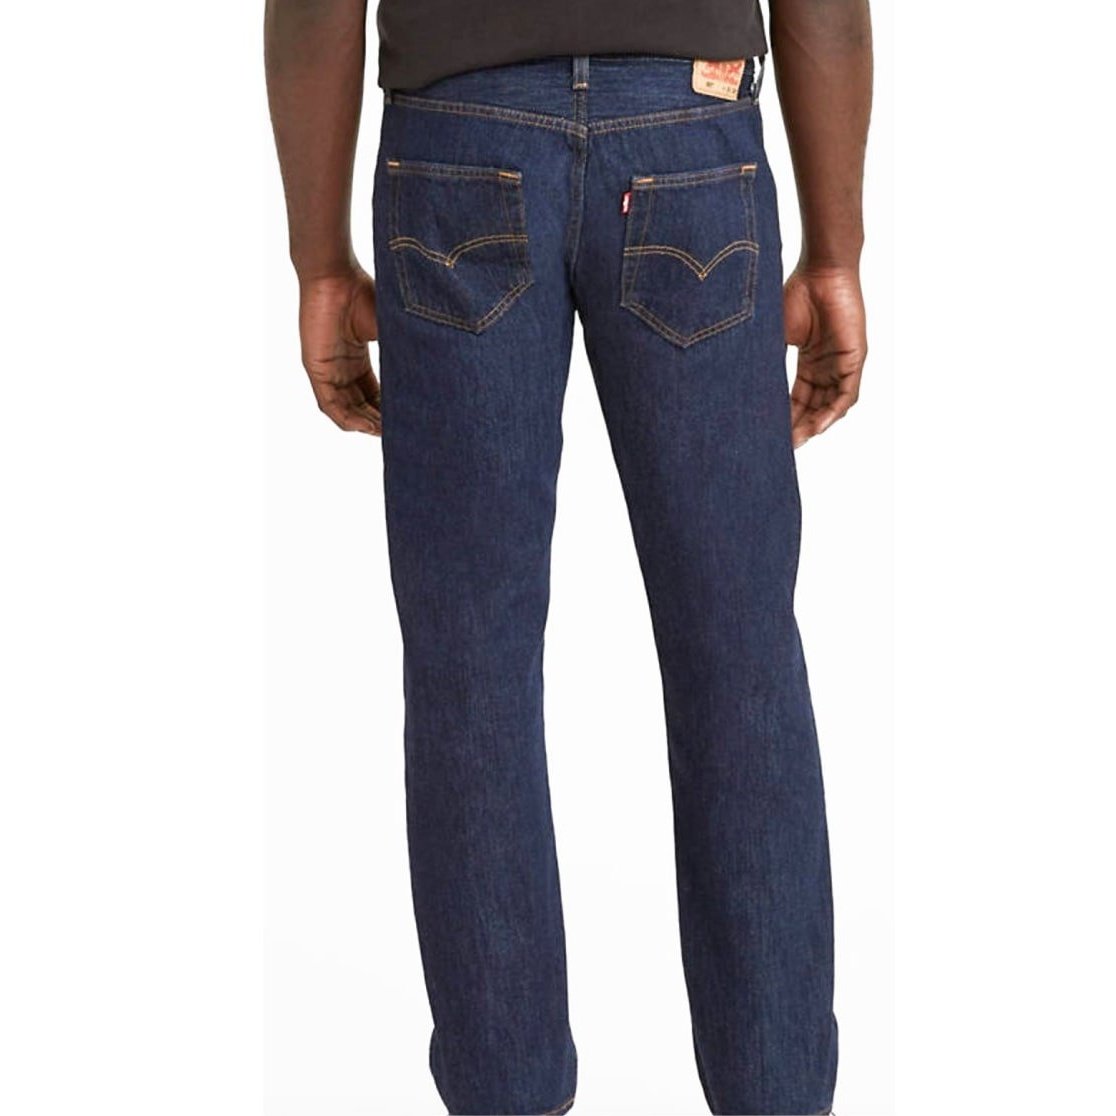 Levi’s Men’s Jeans 501 Original Fit Dark Wash 005010105 - Levi's